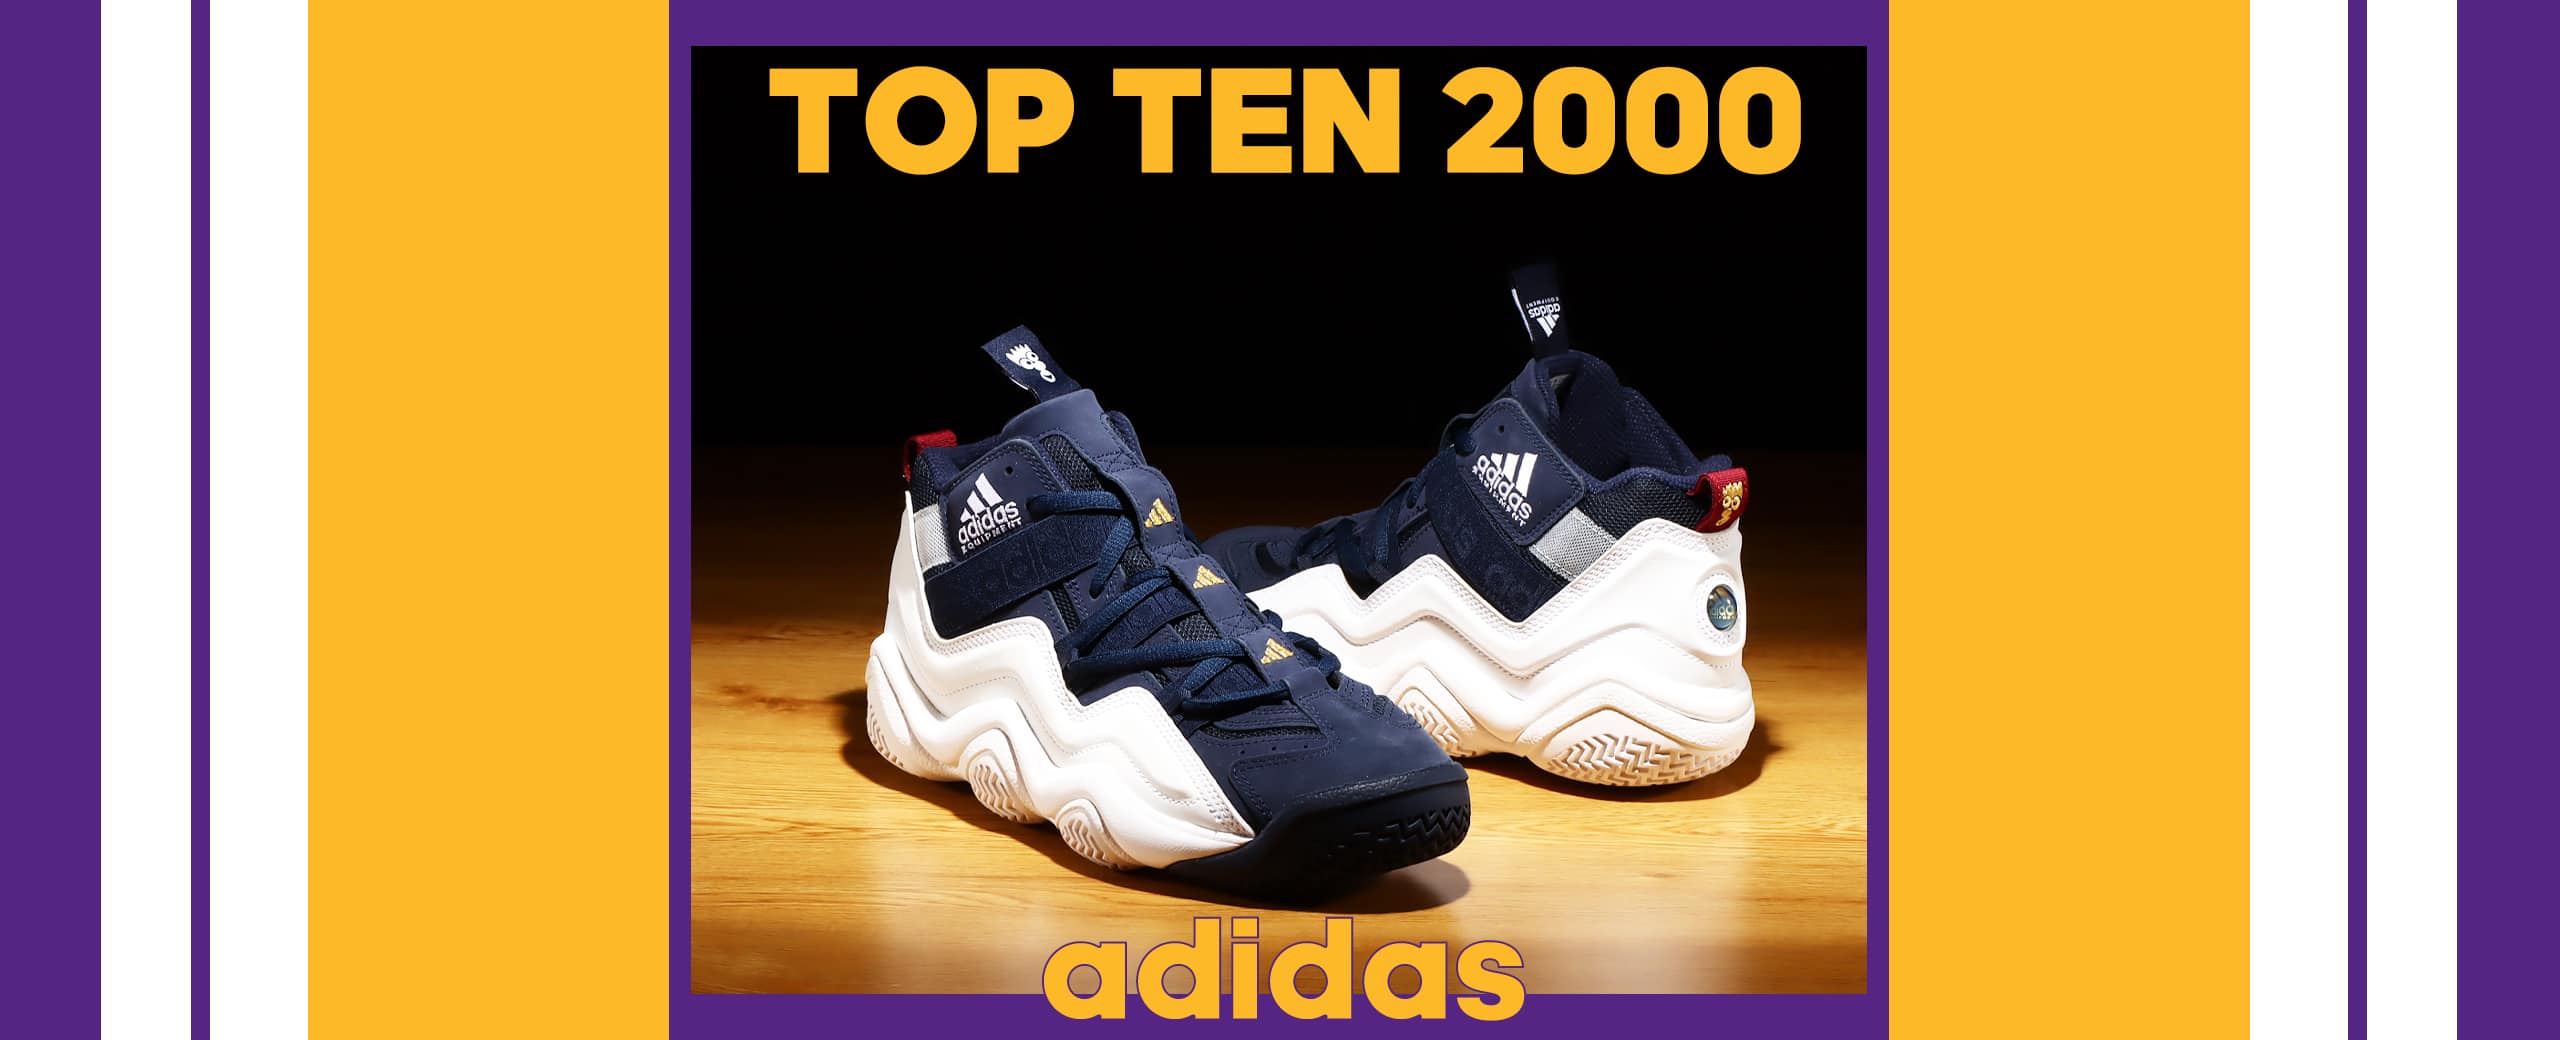 adidas Originals TOP TEN 2000